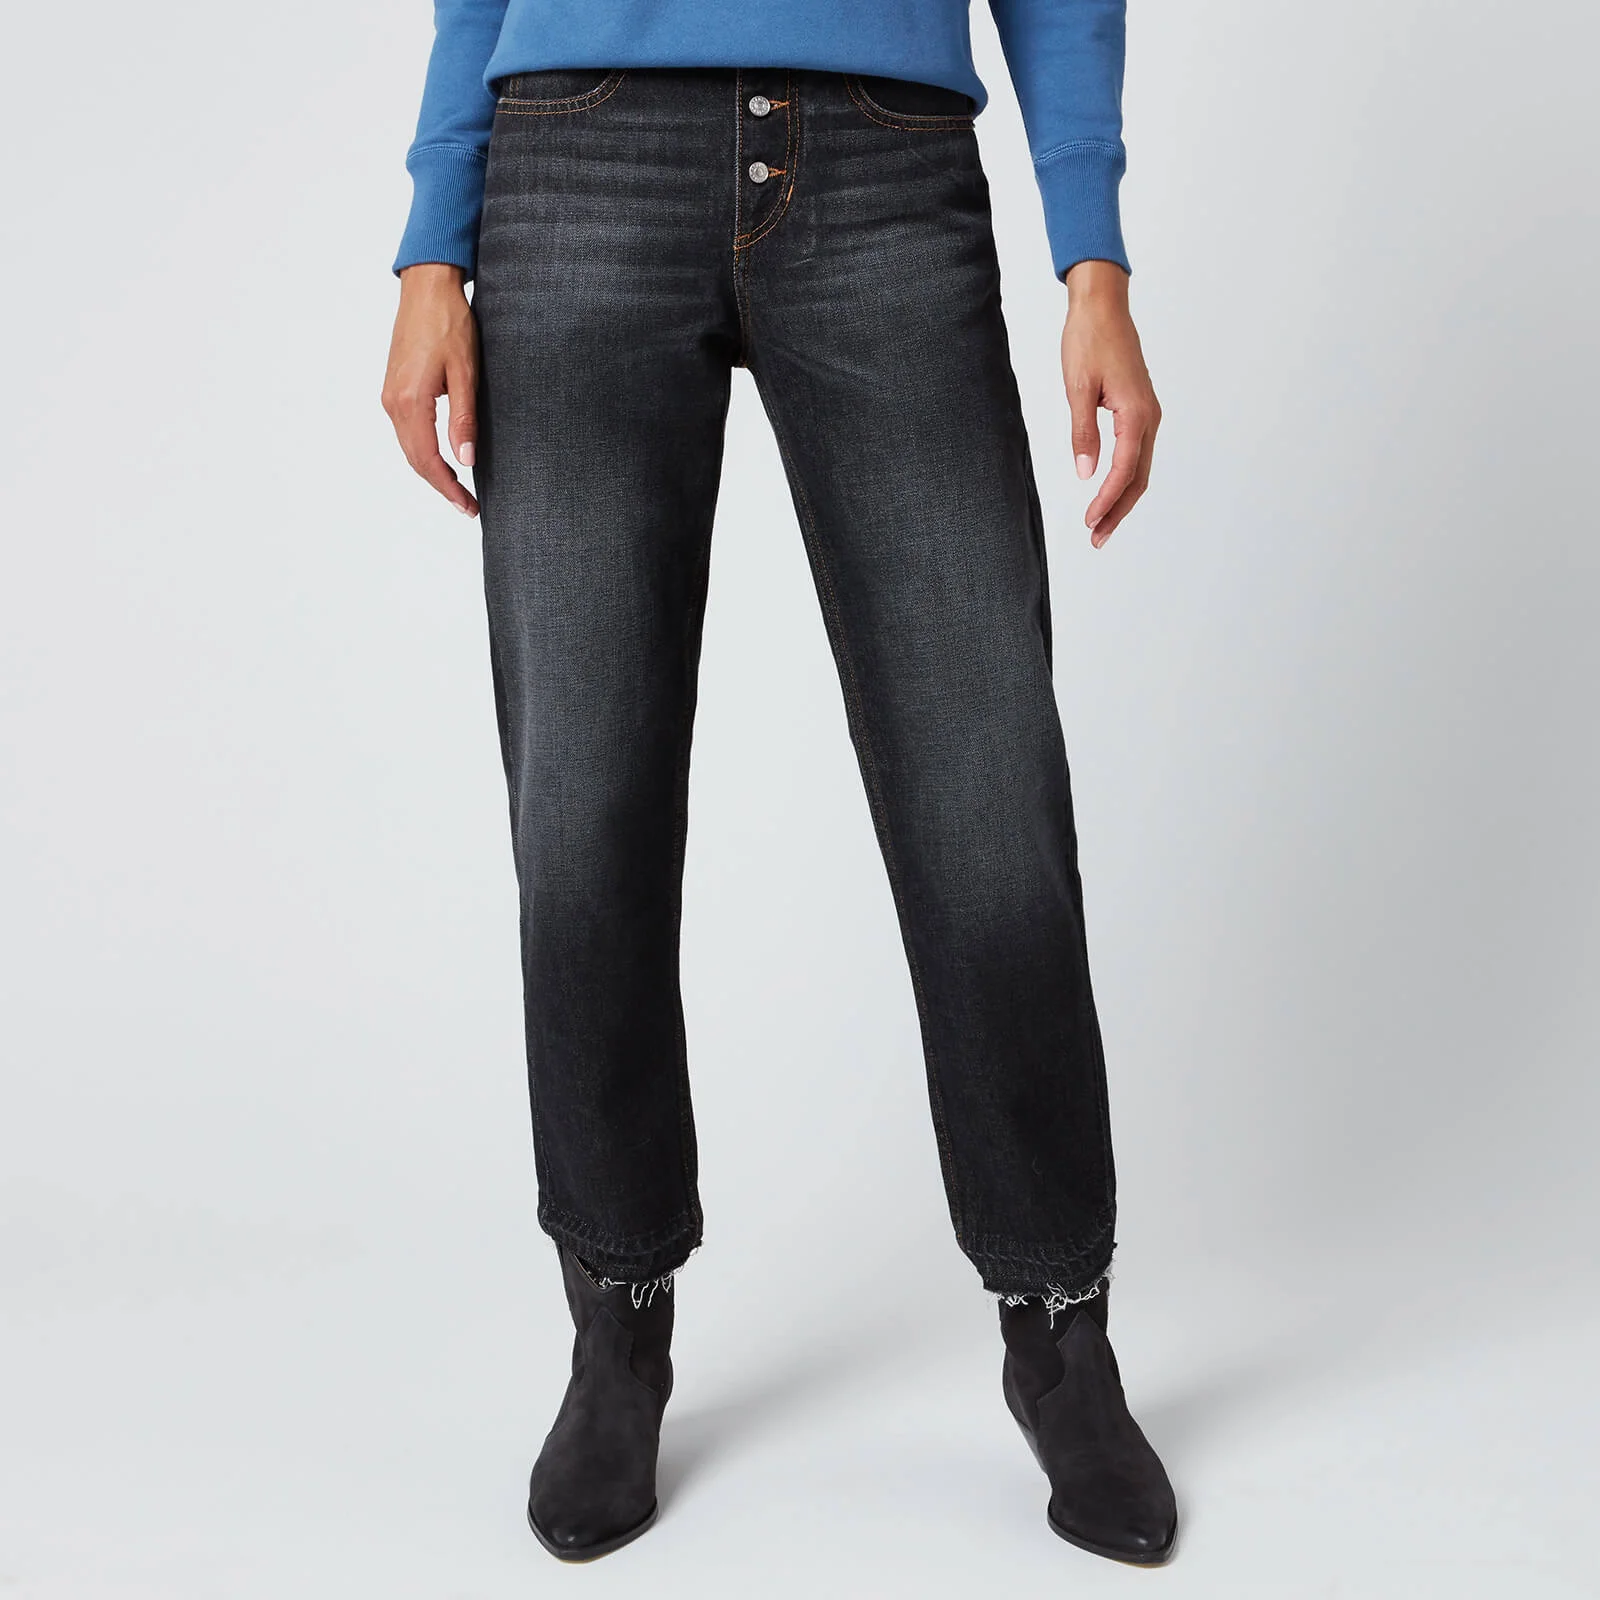 Marant Etoile Women's Belden Jeans - Faded Black Image 1